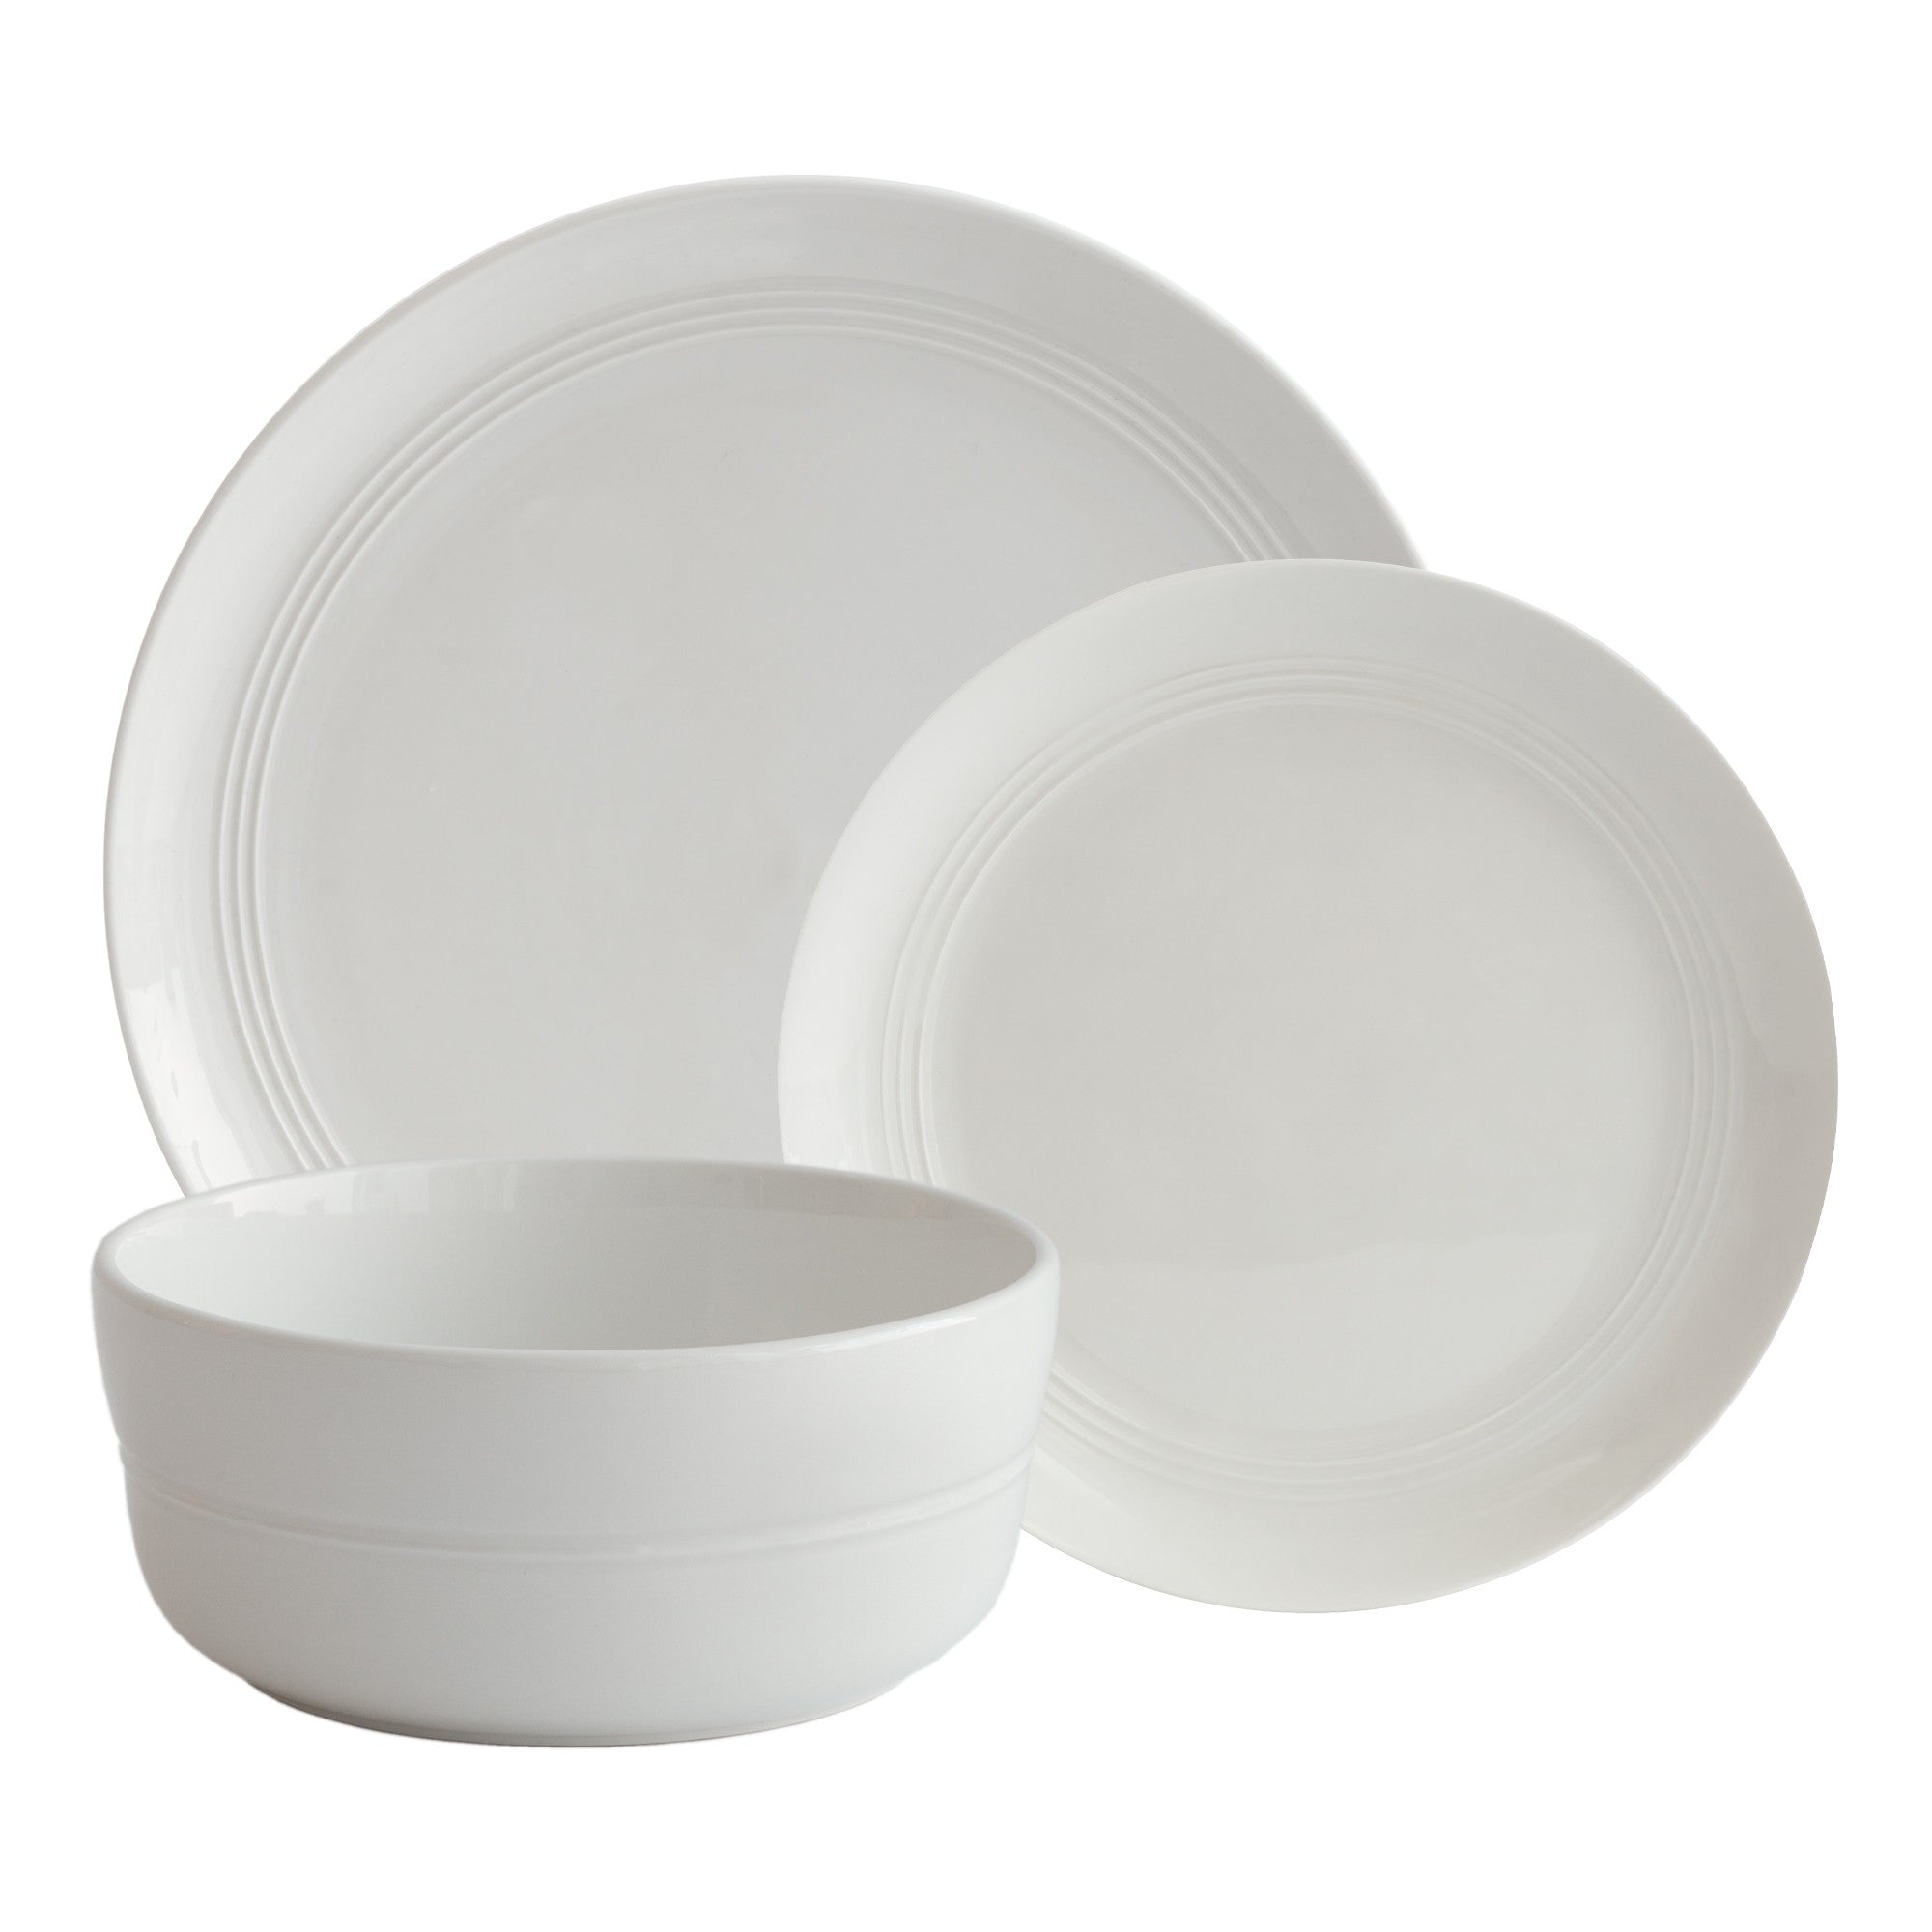 title:Safdie & Co. Dinnerset 12PC Porcelain Embossed Allure;color:Multi